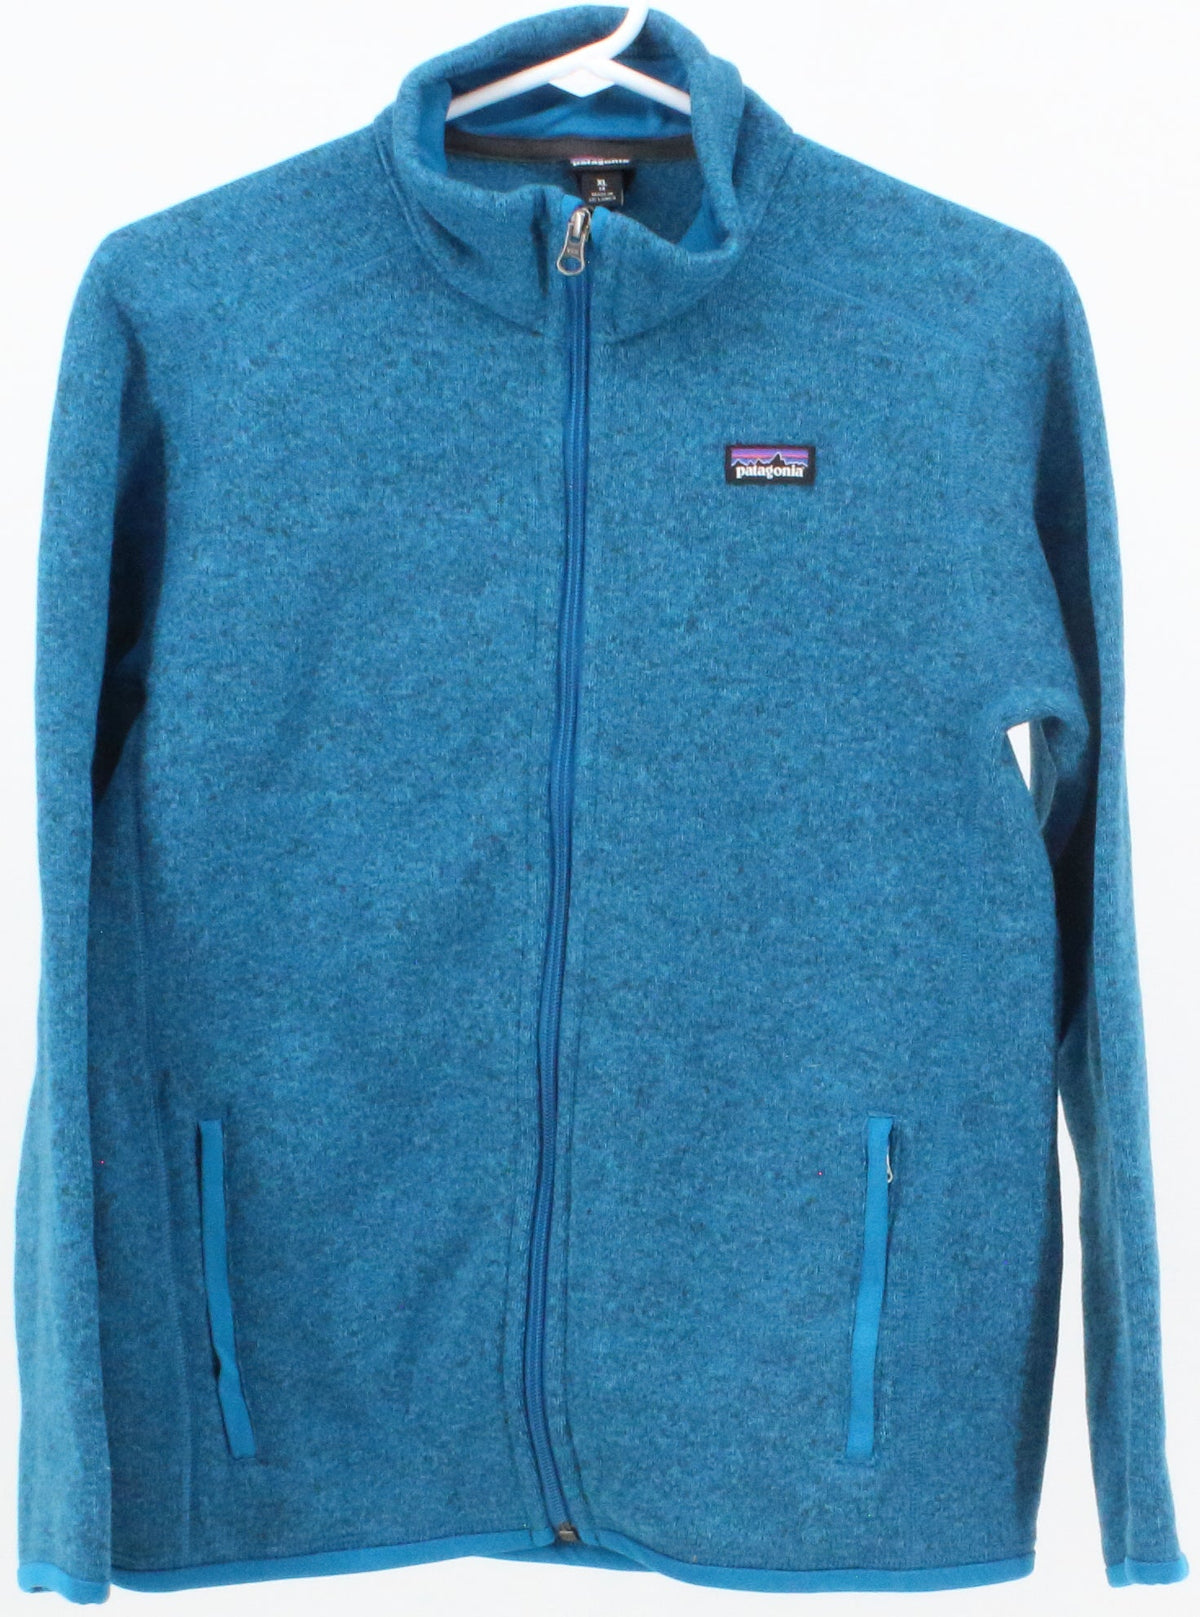 Patagonia Blue Fleece Jacket